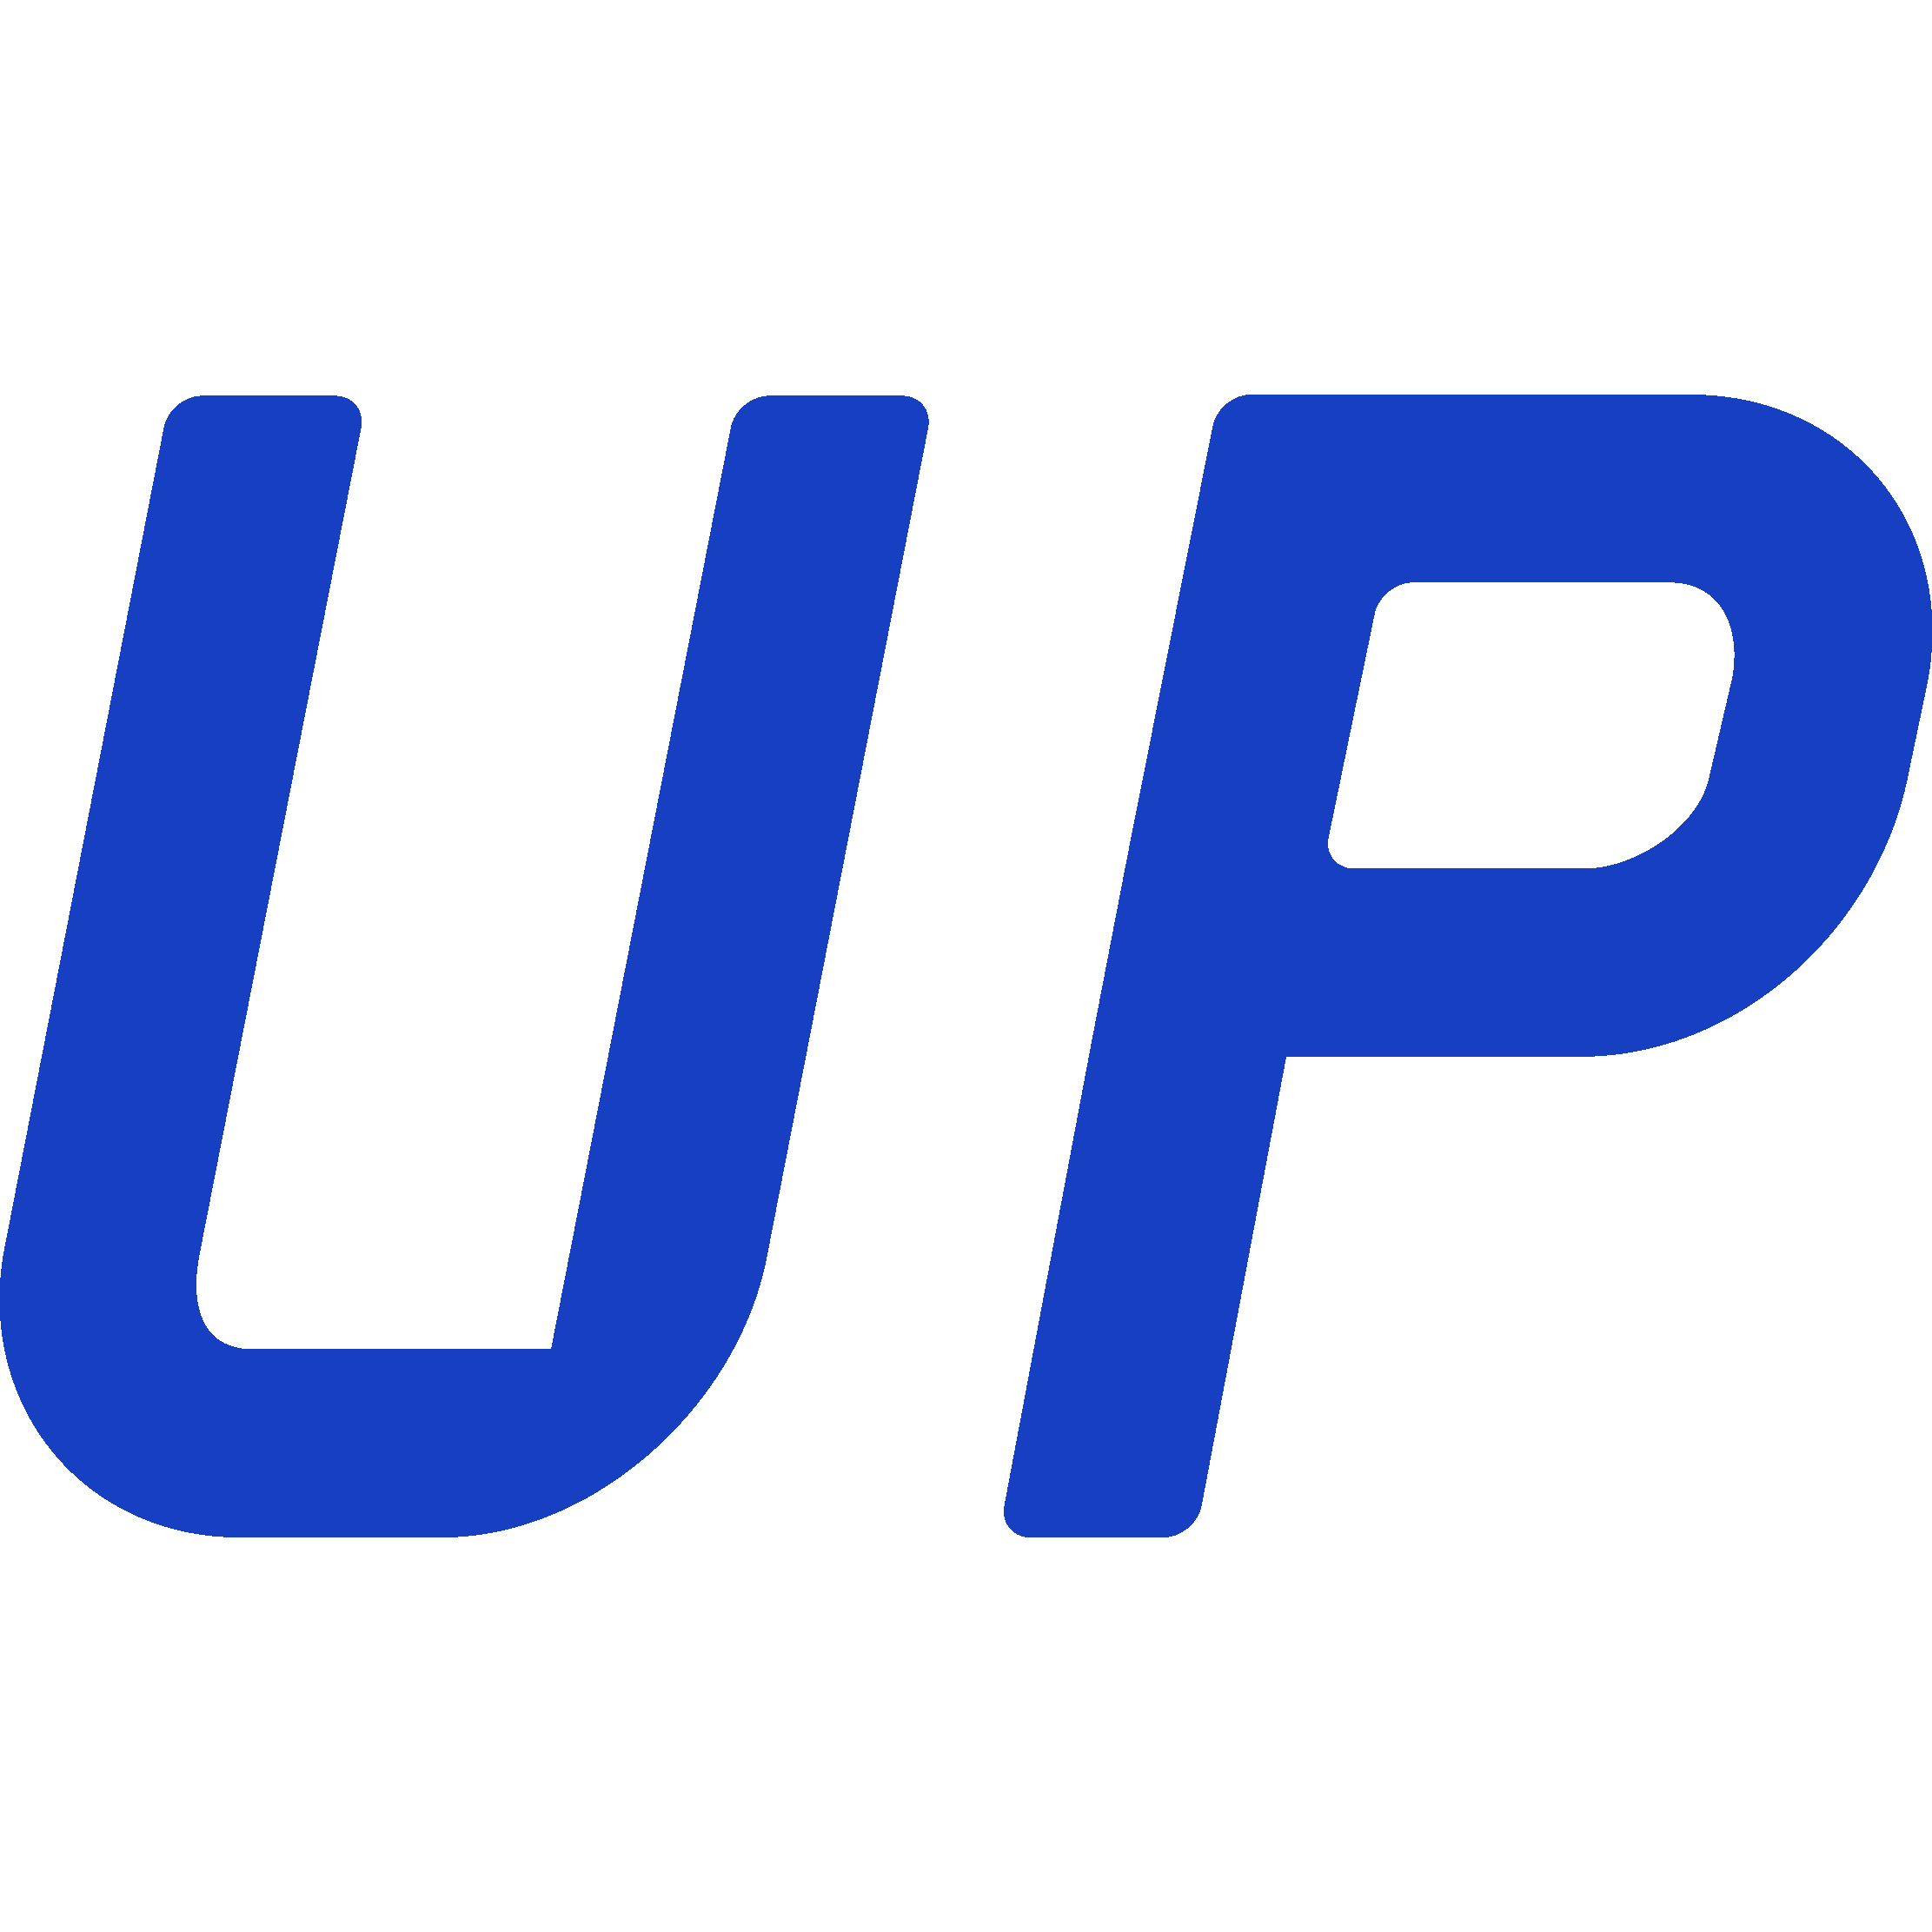 WHEELS UP logo